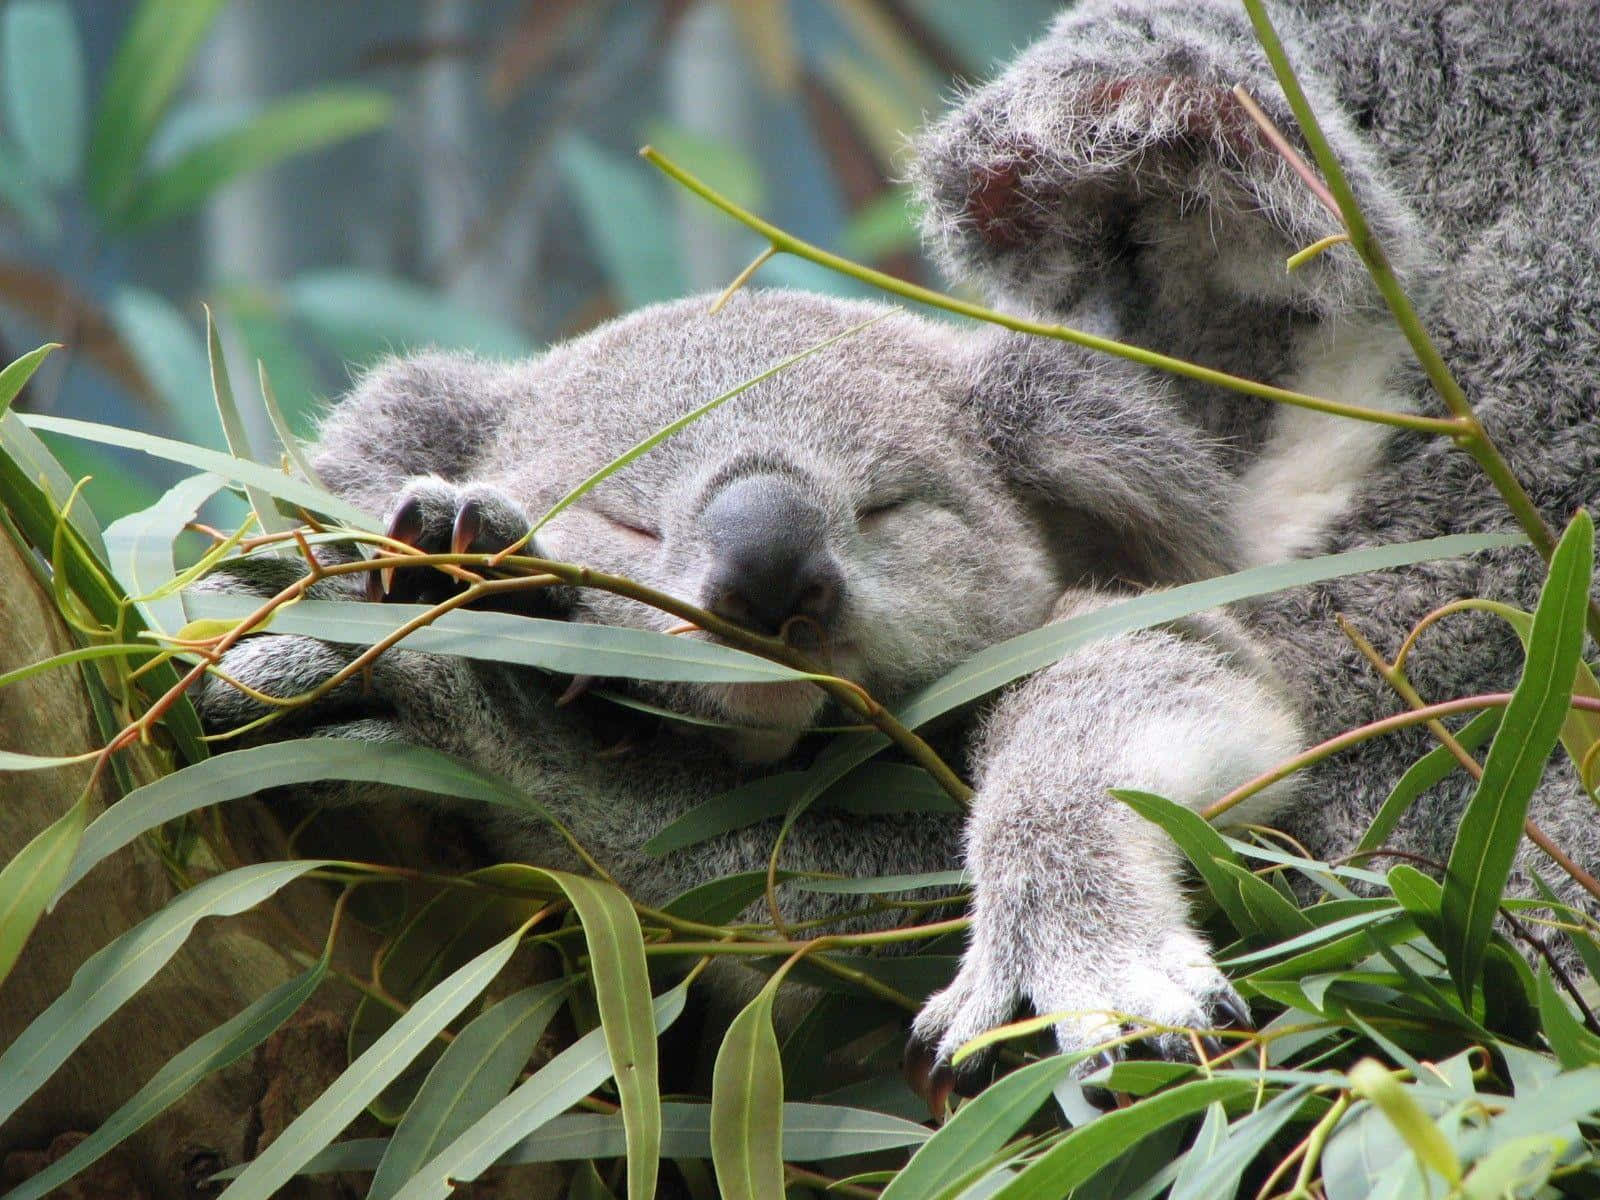 An adorable sleepy Koala lounging in a eucalyptus tree